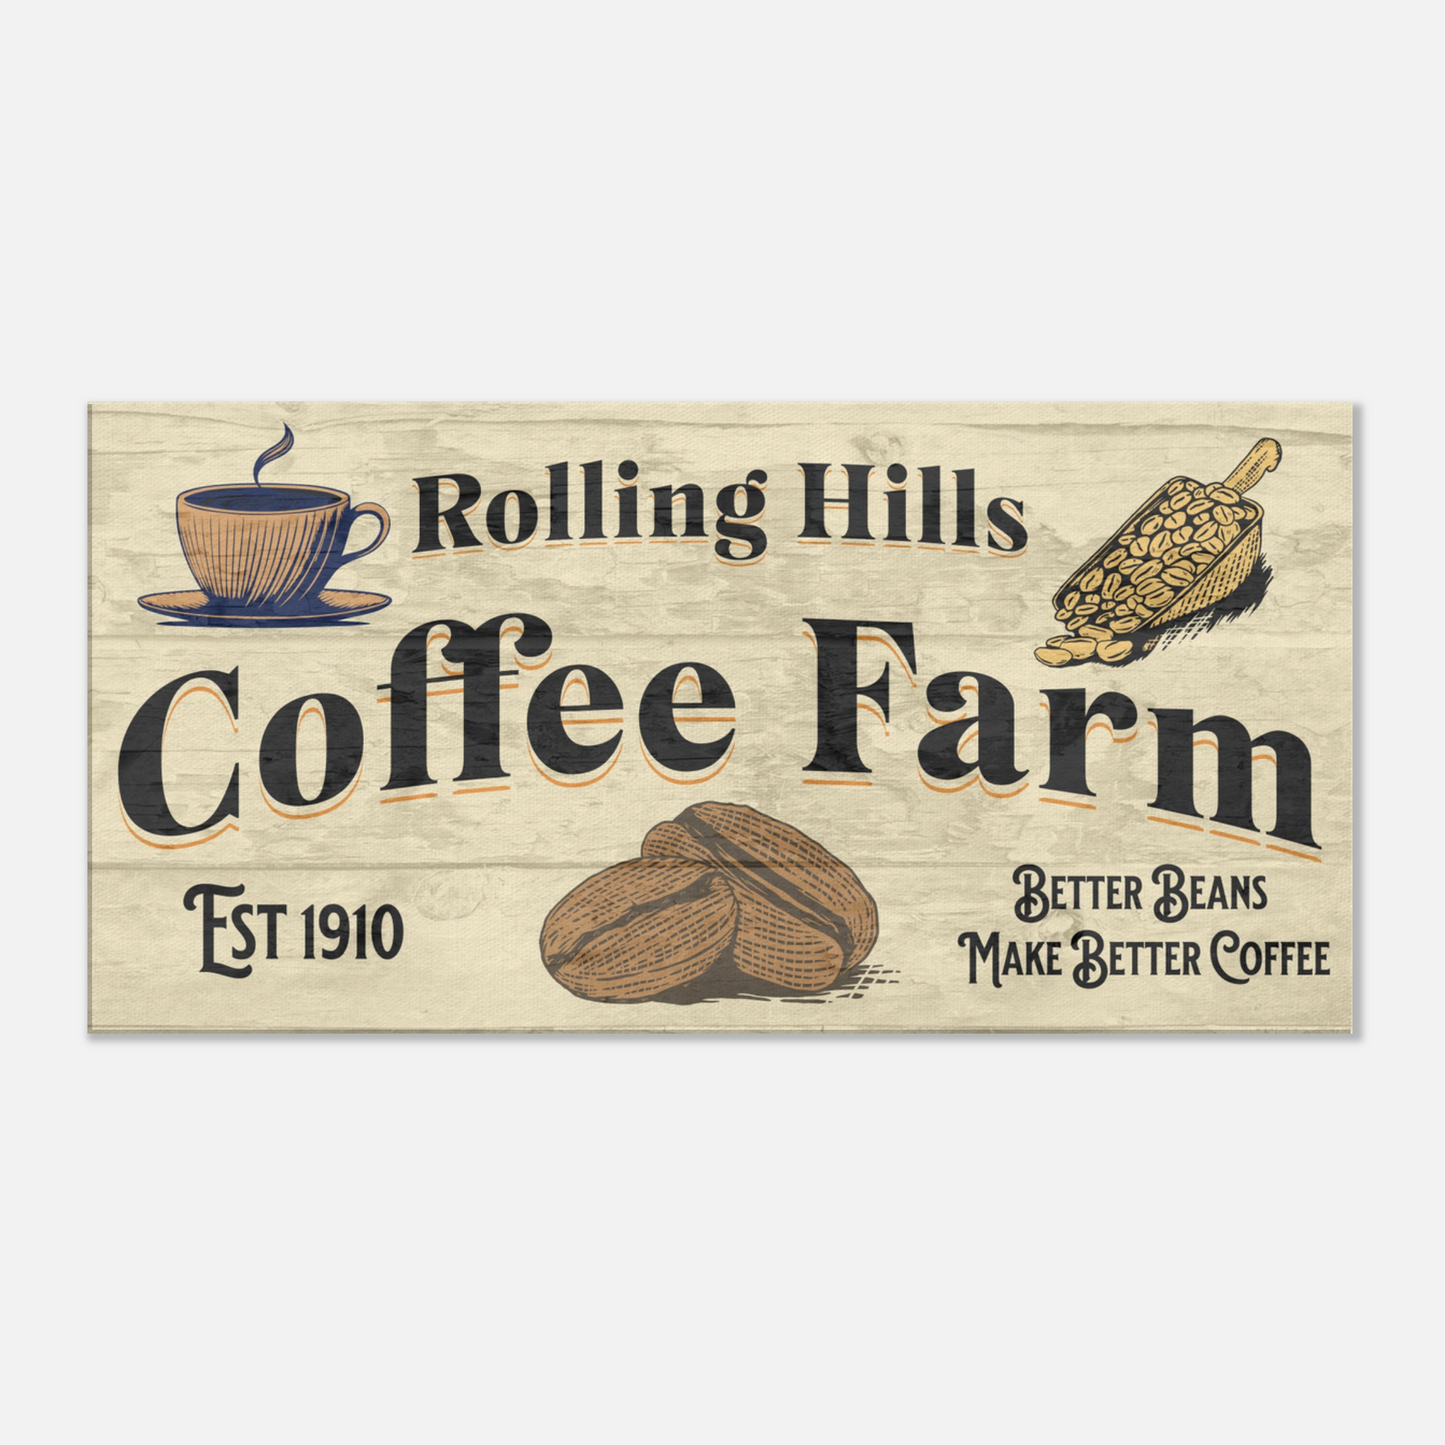 Rolling Hills Coffee Farm Canvas Prints at Java Good Coffee